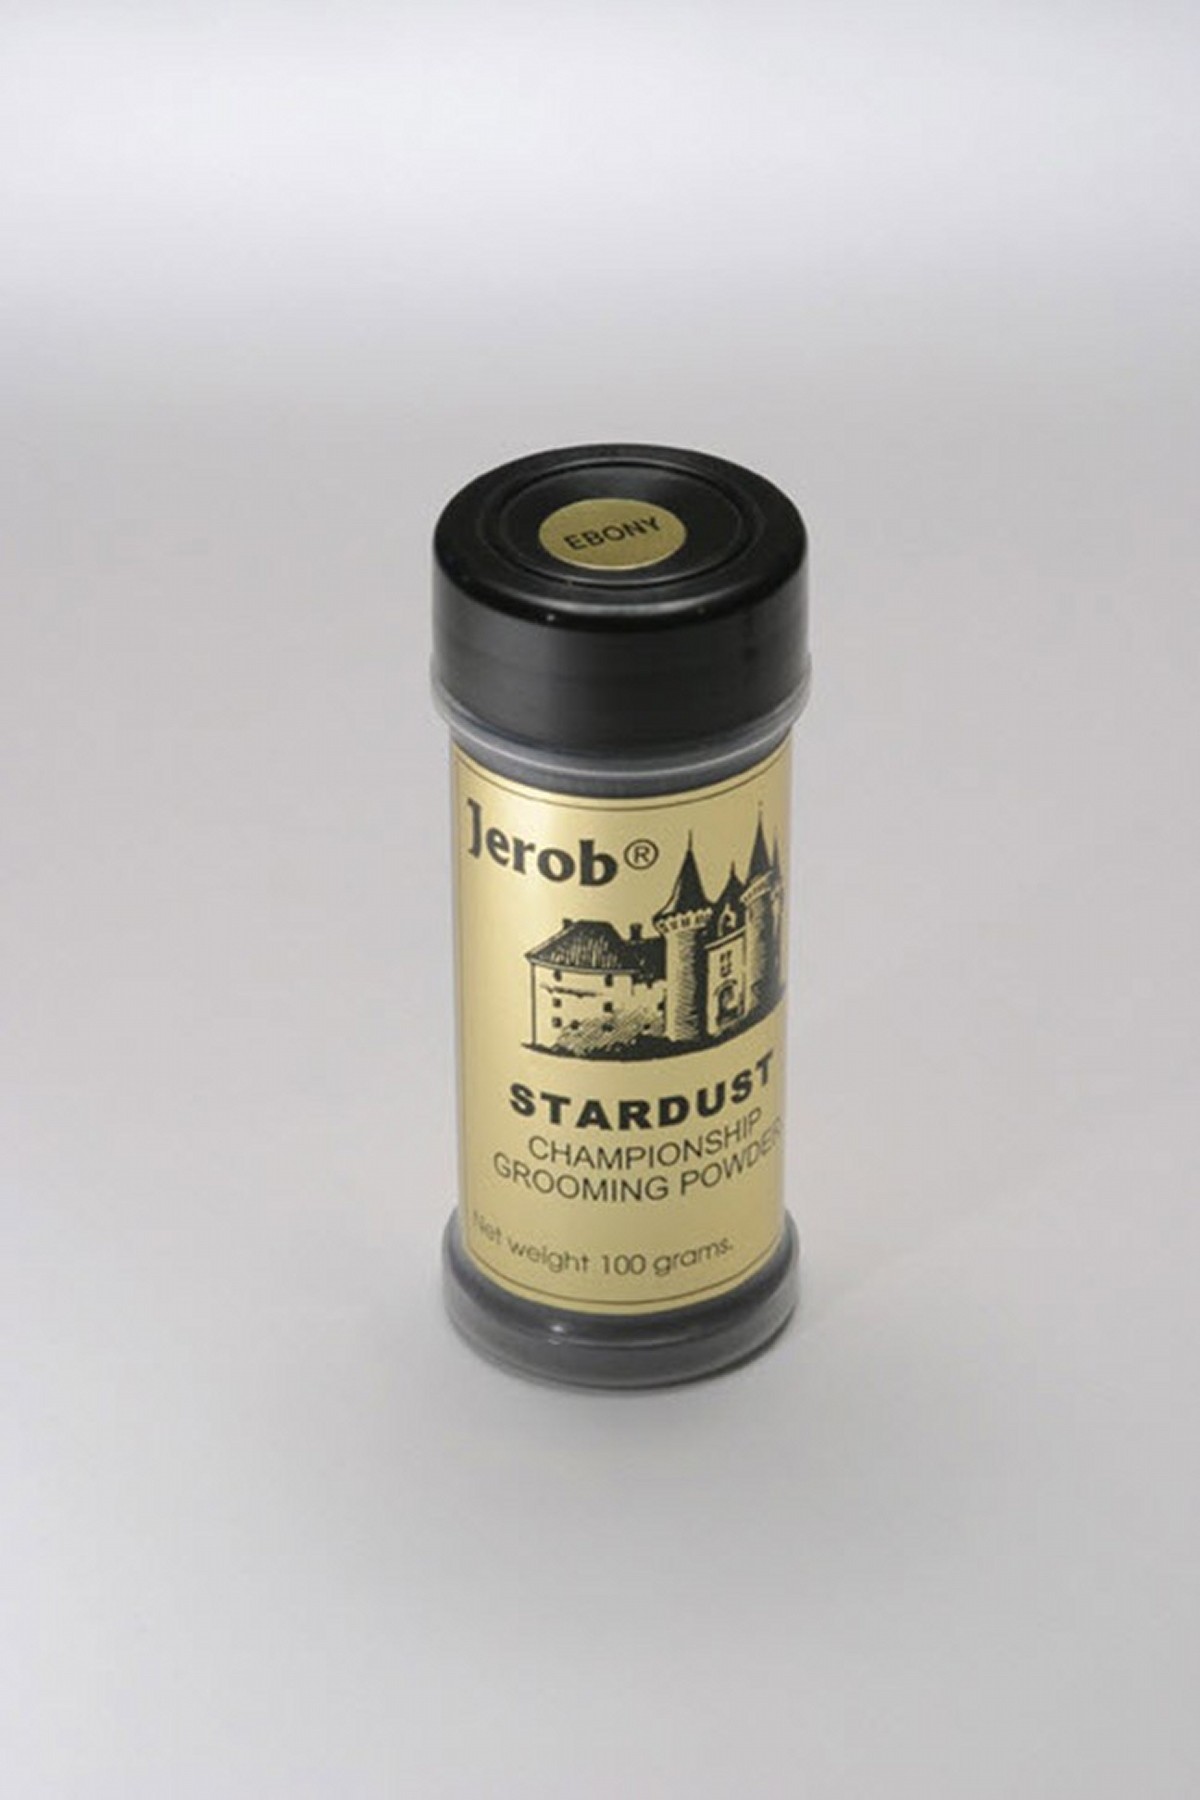 Stardust for Jerob - Black